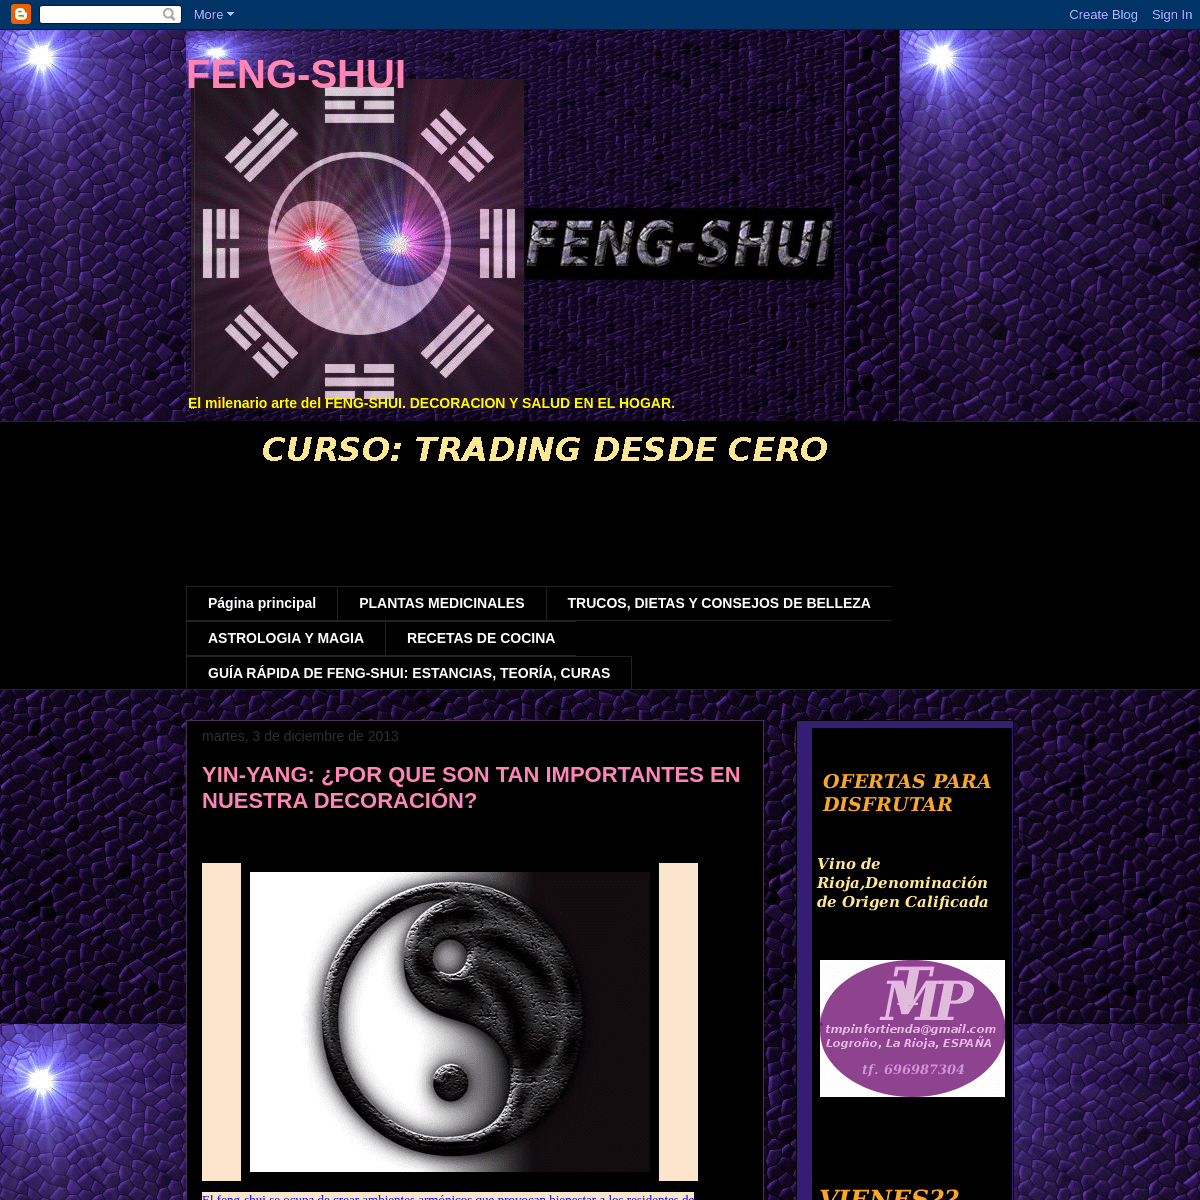 A complete backup of feng-shui-martha.blogspot.com